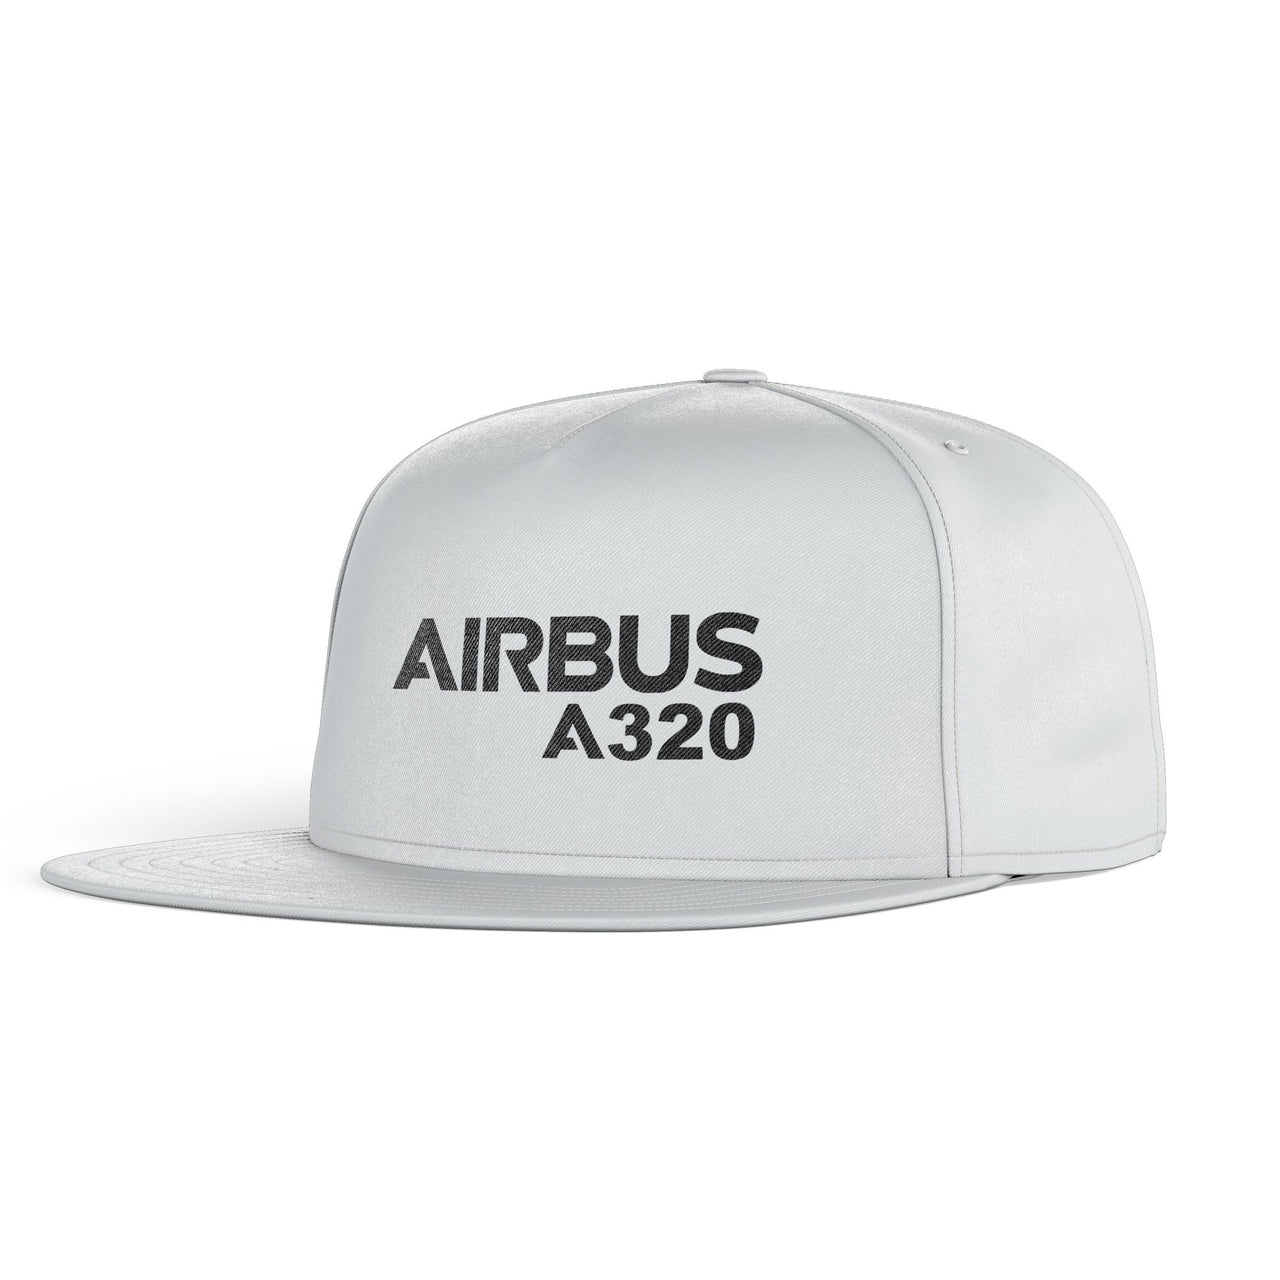 Airbus A320 & Text Designed Snapback Caps & Hats